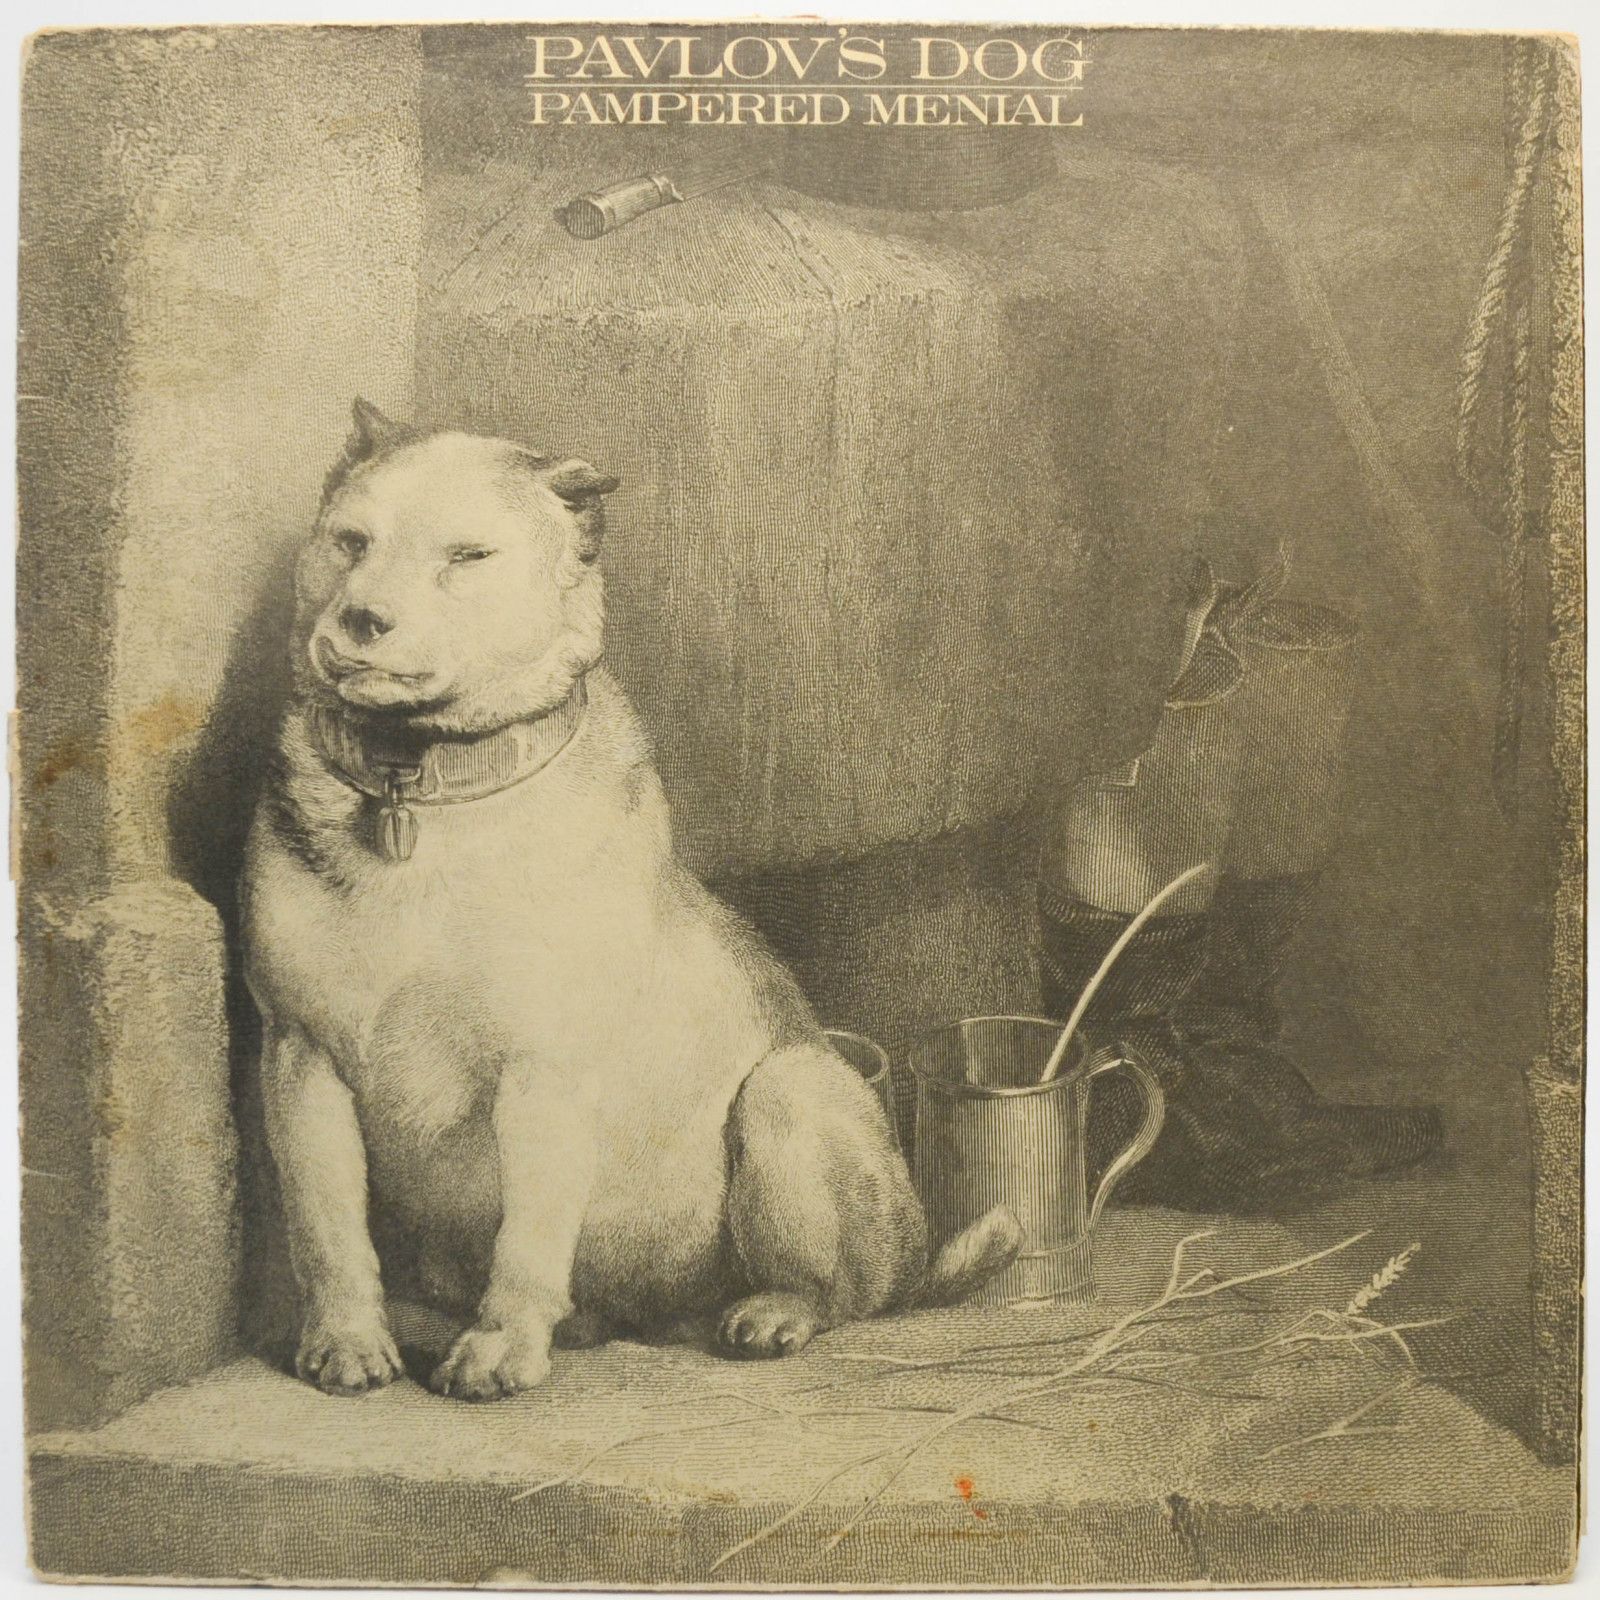 Pavlov's Dog — Pampered Menial, 1975